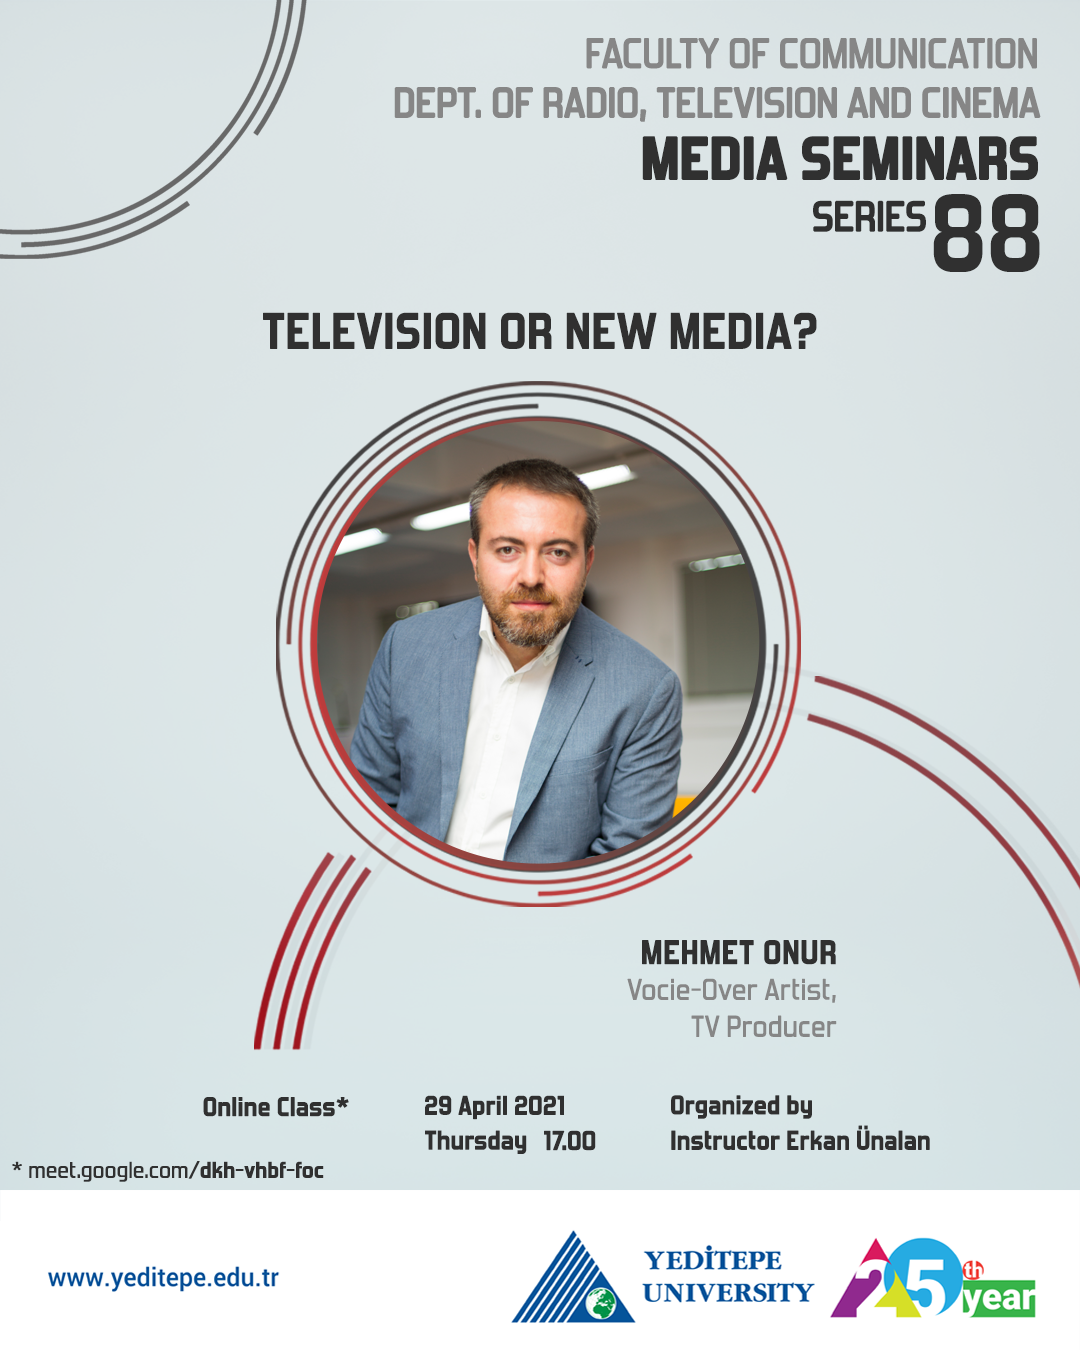 Department of Radio, Television and Cinema Media Seminars Series 88